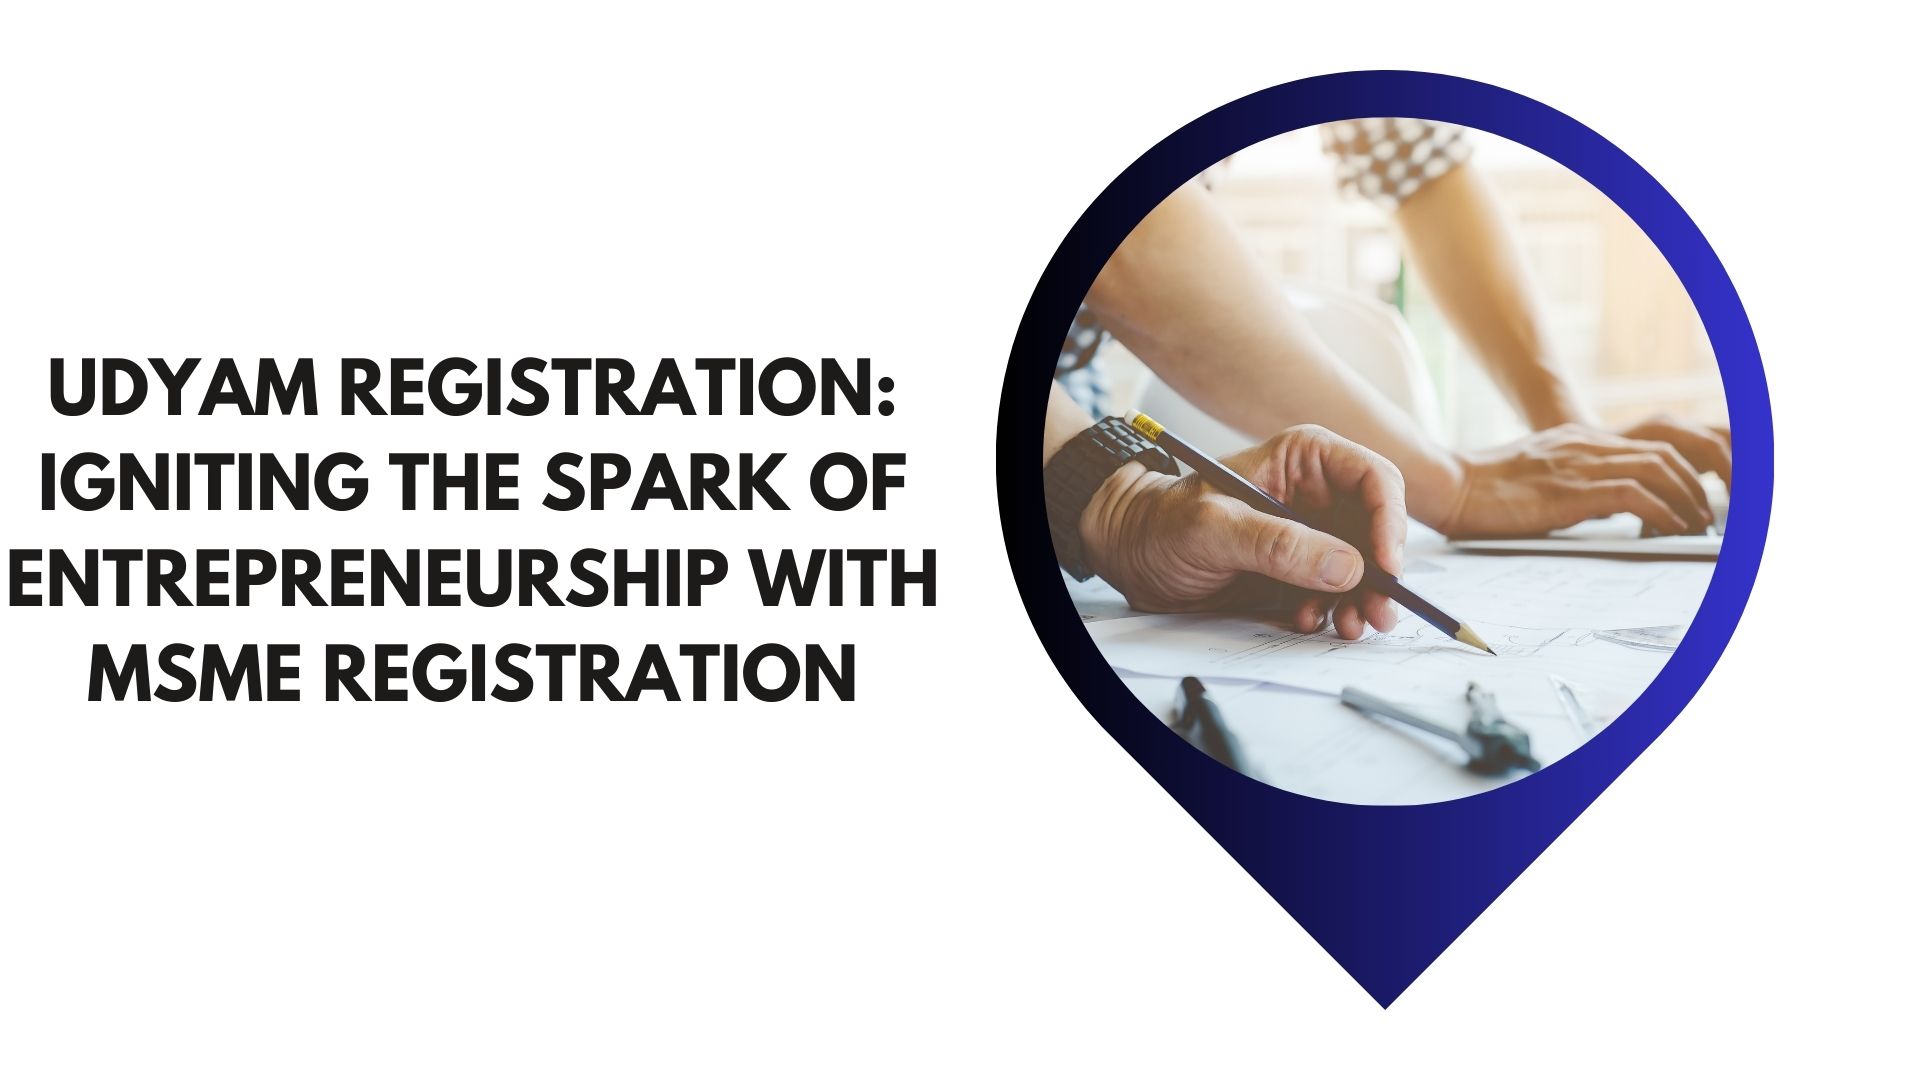 Udyam Registration: Igniting the Spark of Entrepreneurship with MSME Registration